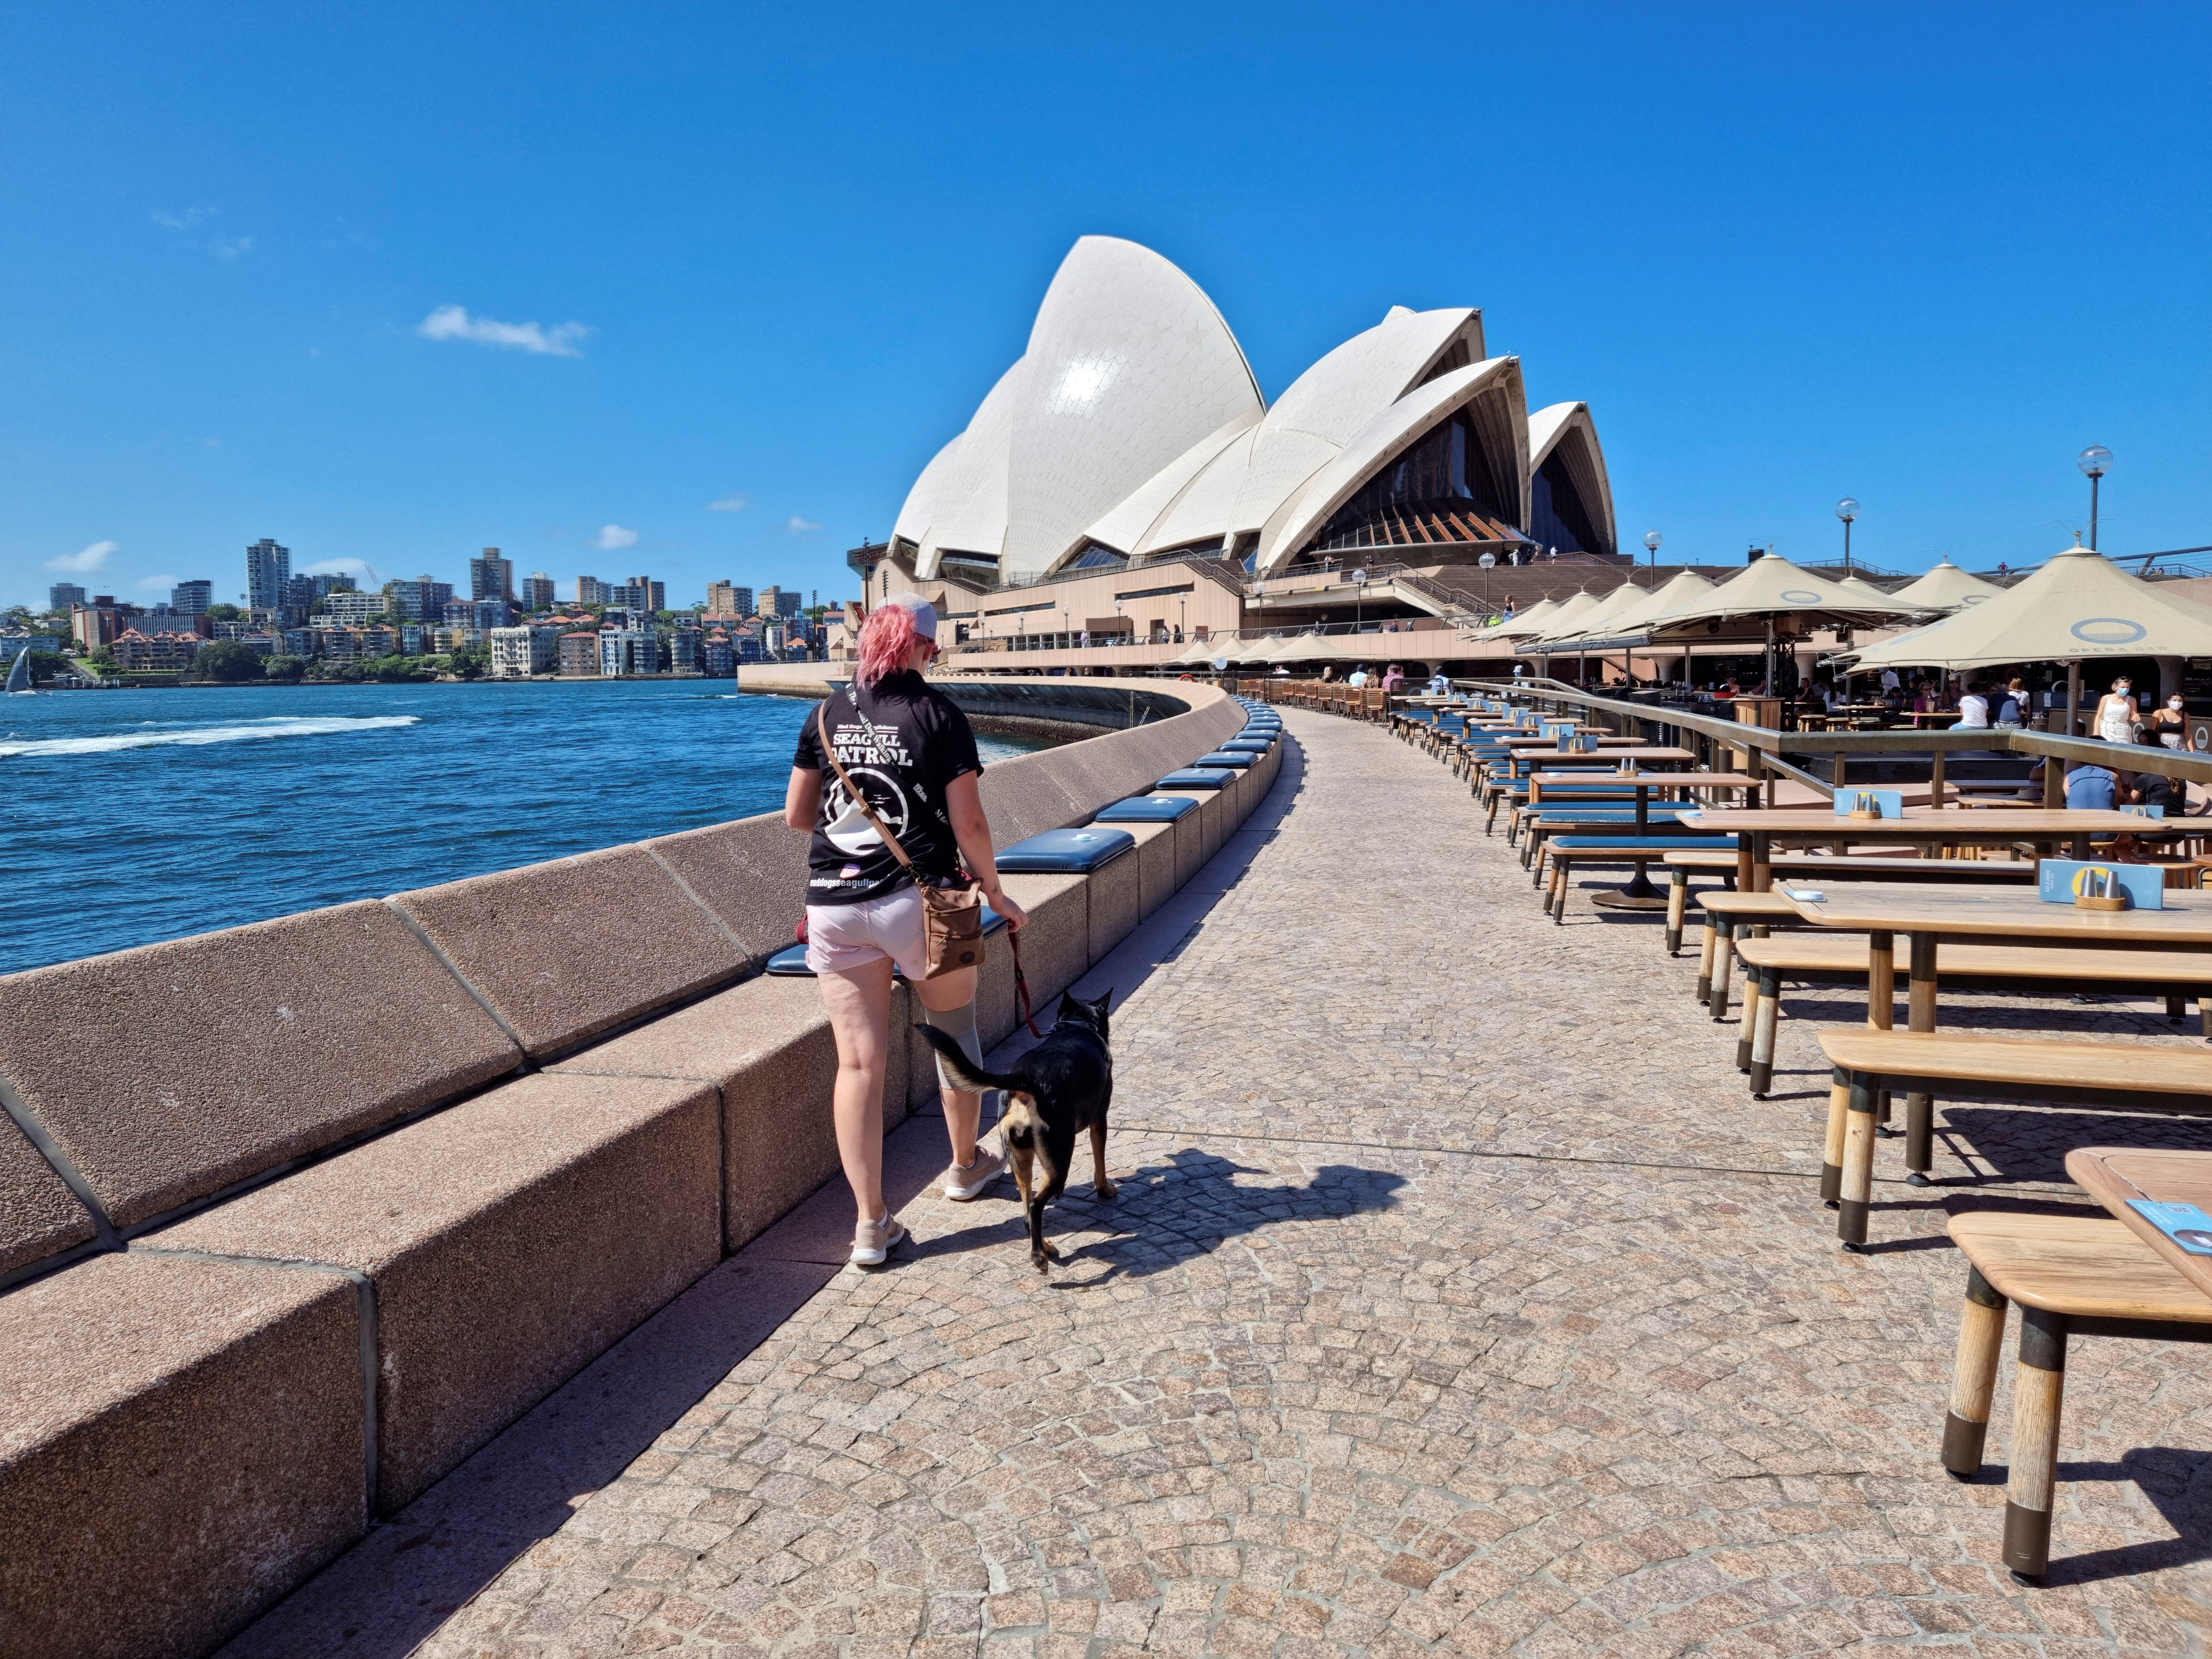 Mad Dogs and Englishmen's dog handler Carla Shoobert and Rasy the dog patrol for seagulls at Sydney’s Opera Bar Australia